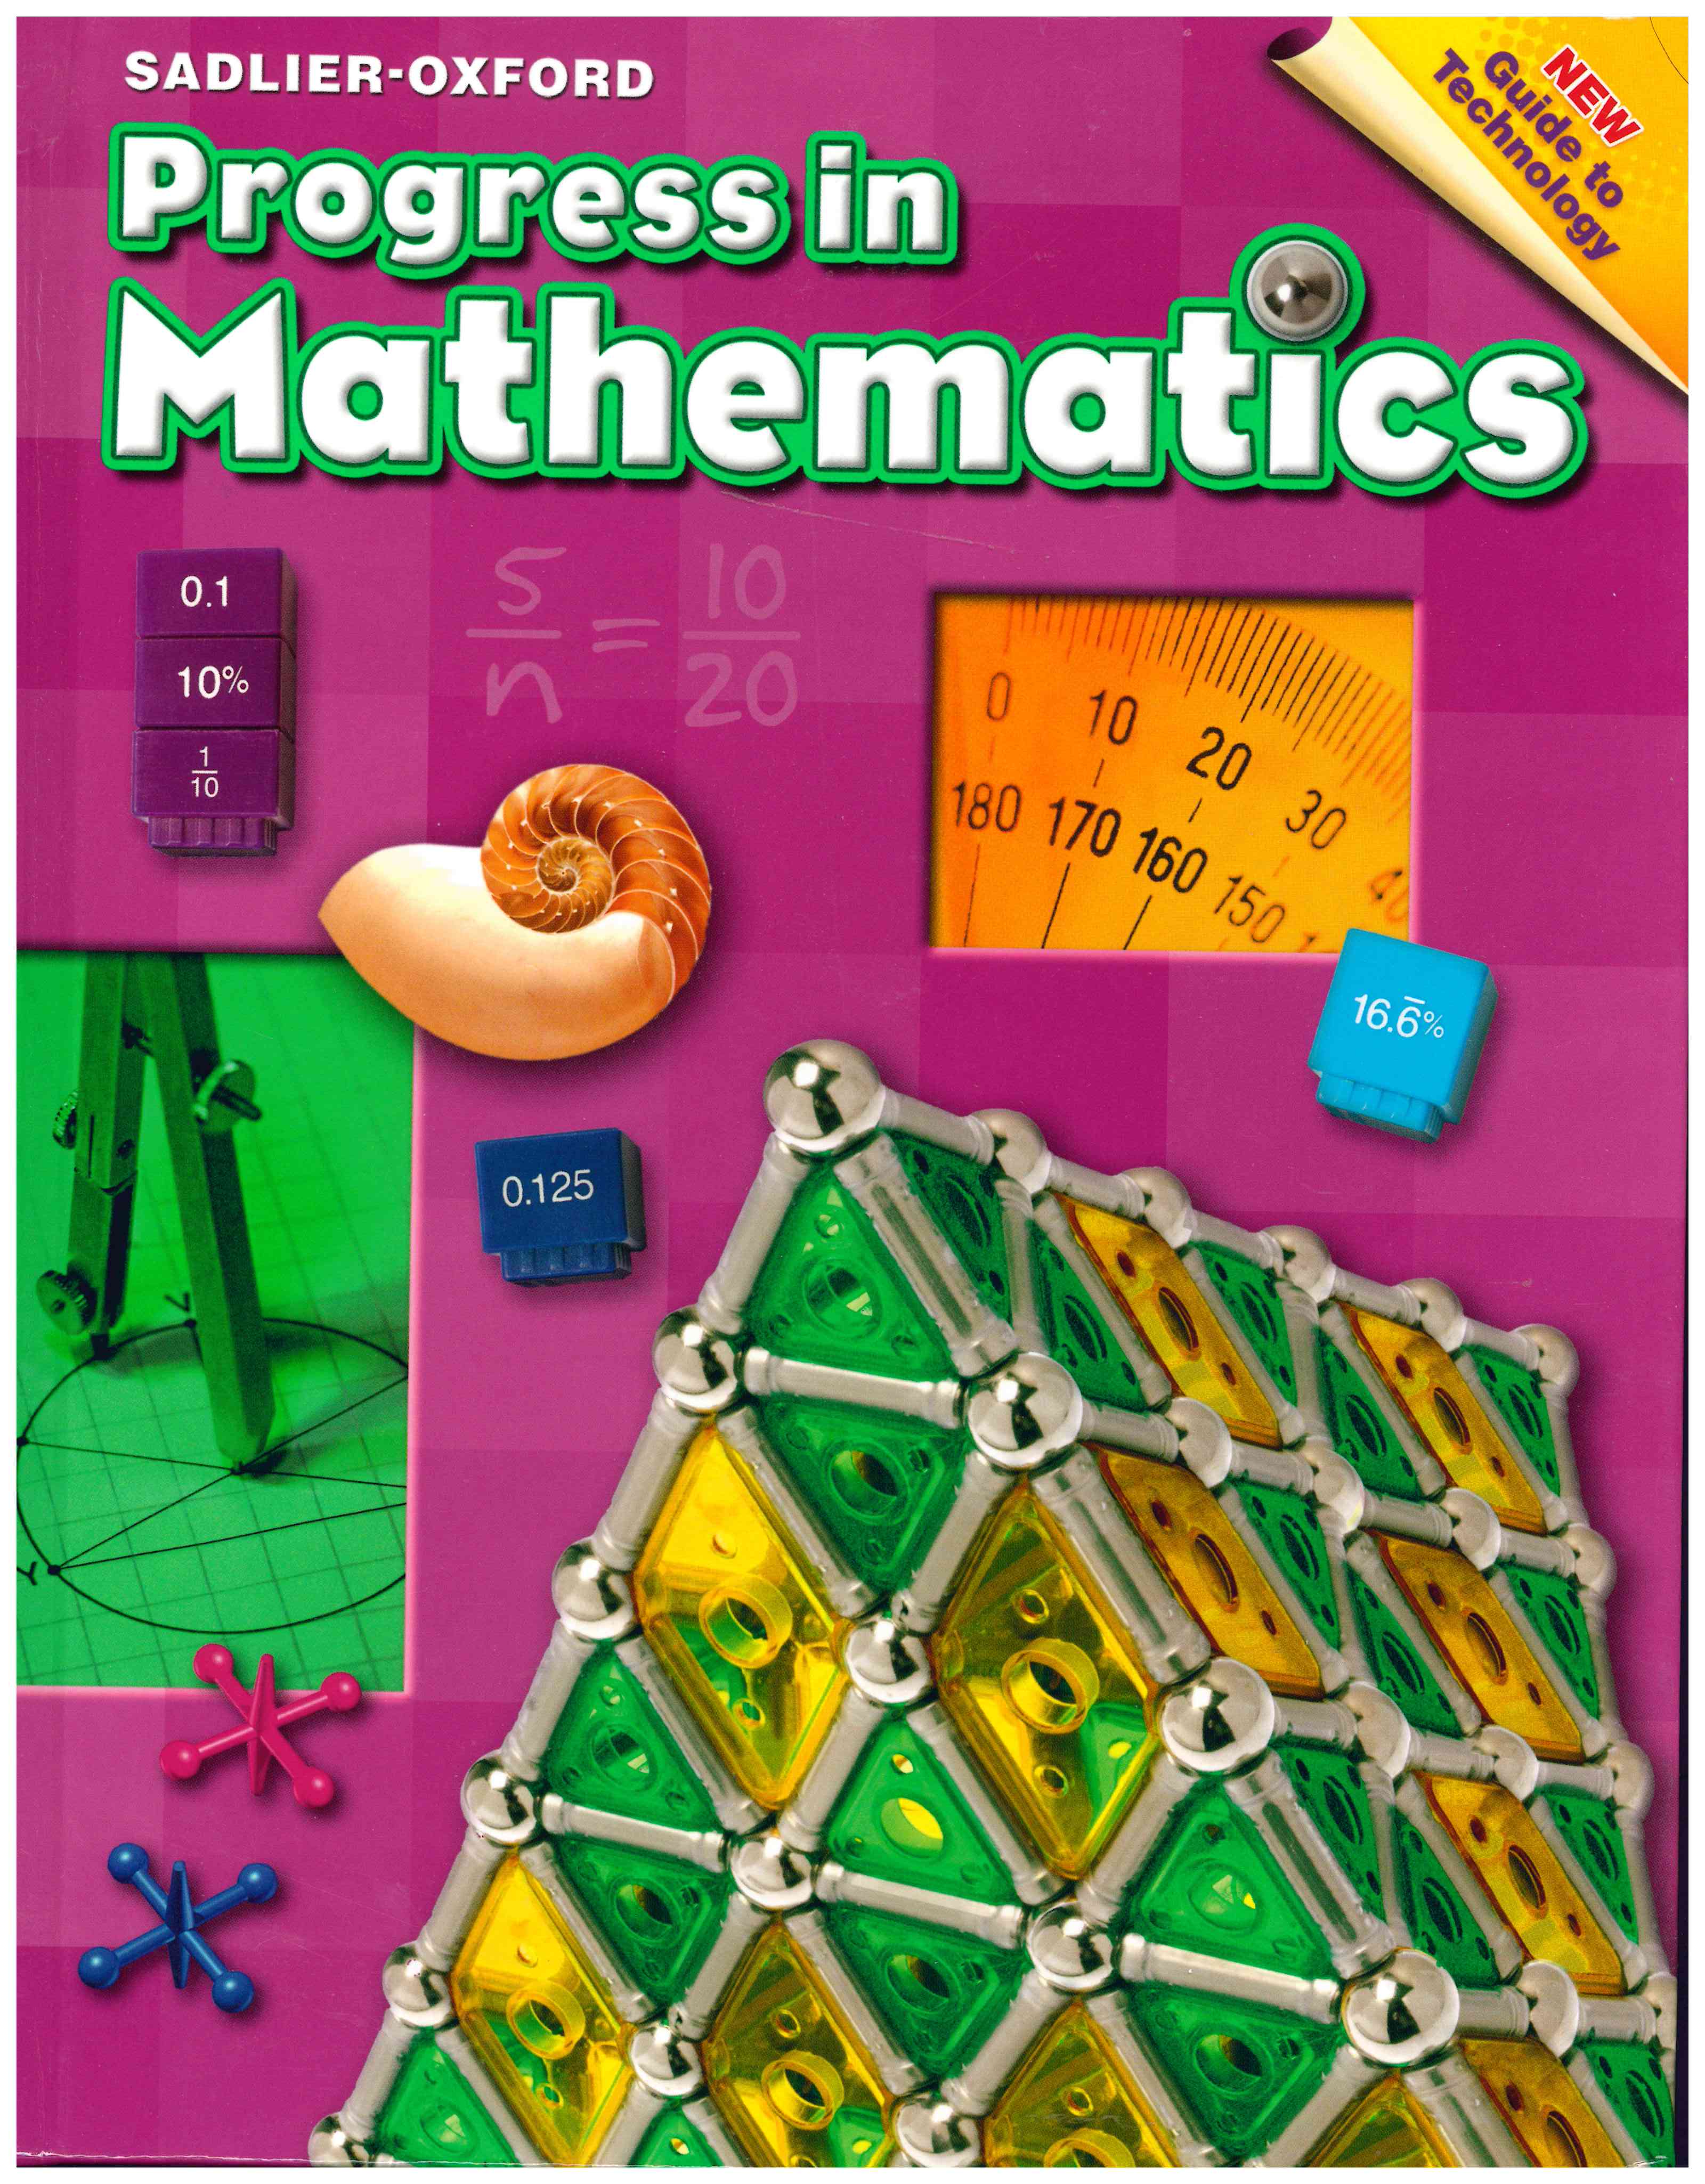 6th grade math books